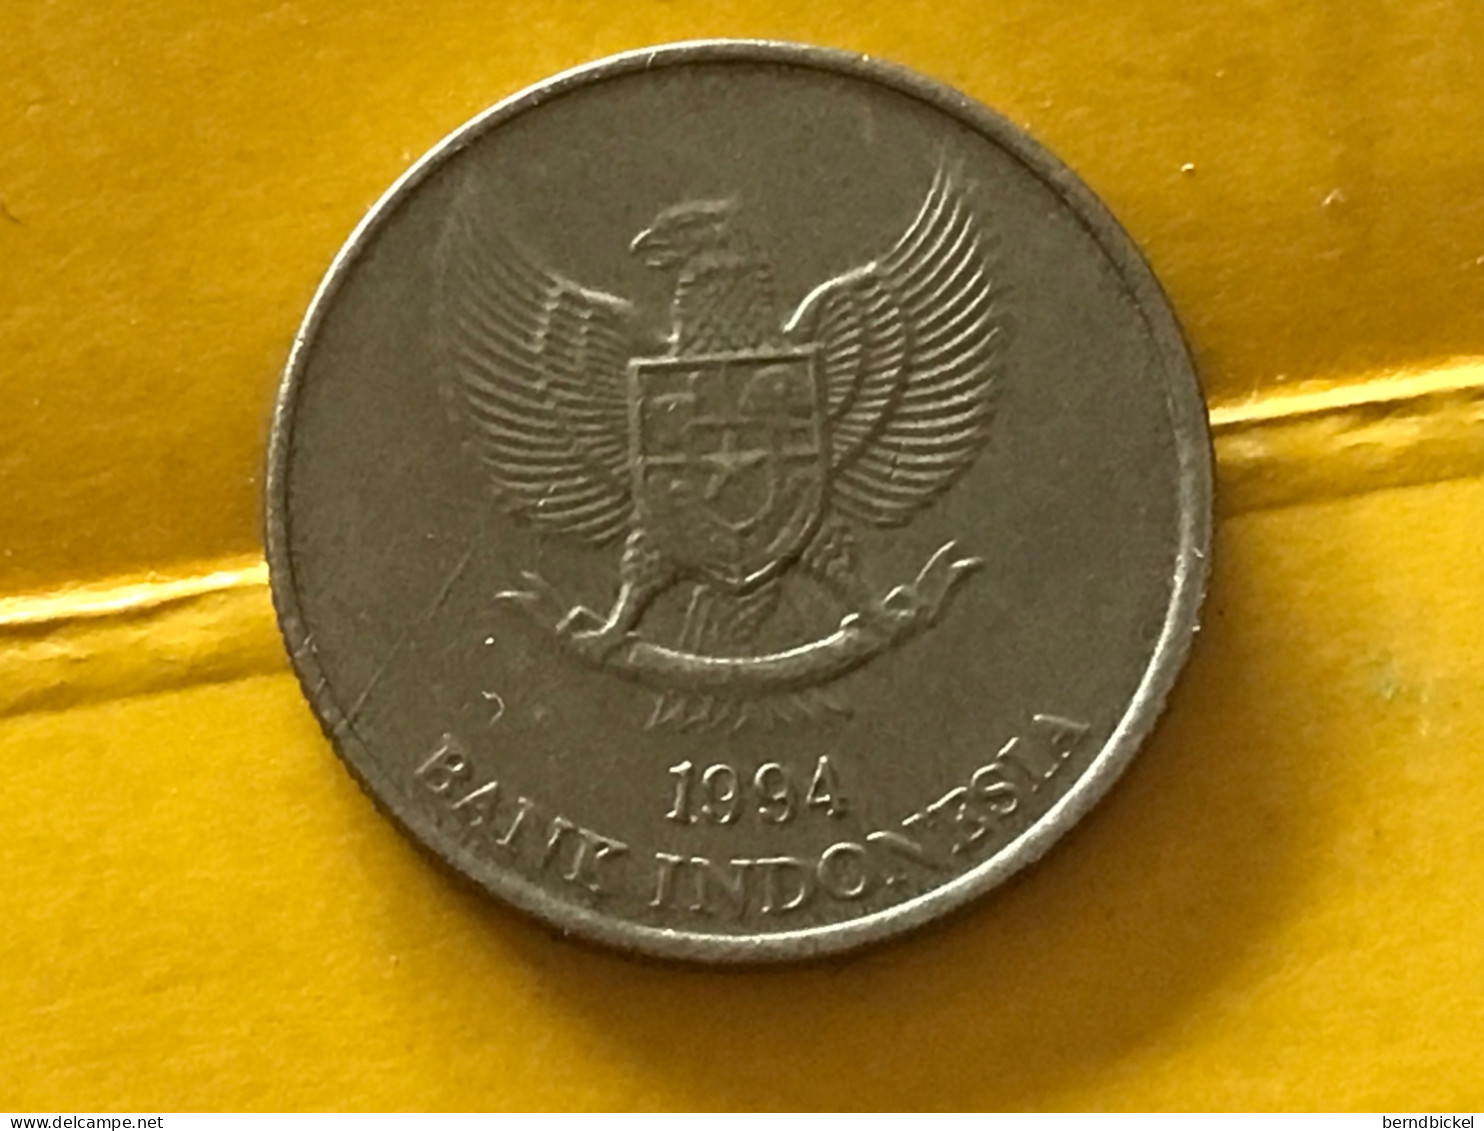 Münze Münzen Umlaufmünze Indonesien 50 Rupien 1994 - Indonesia